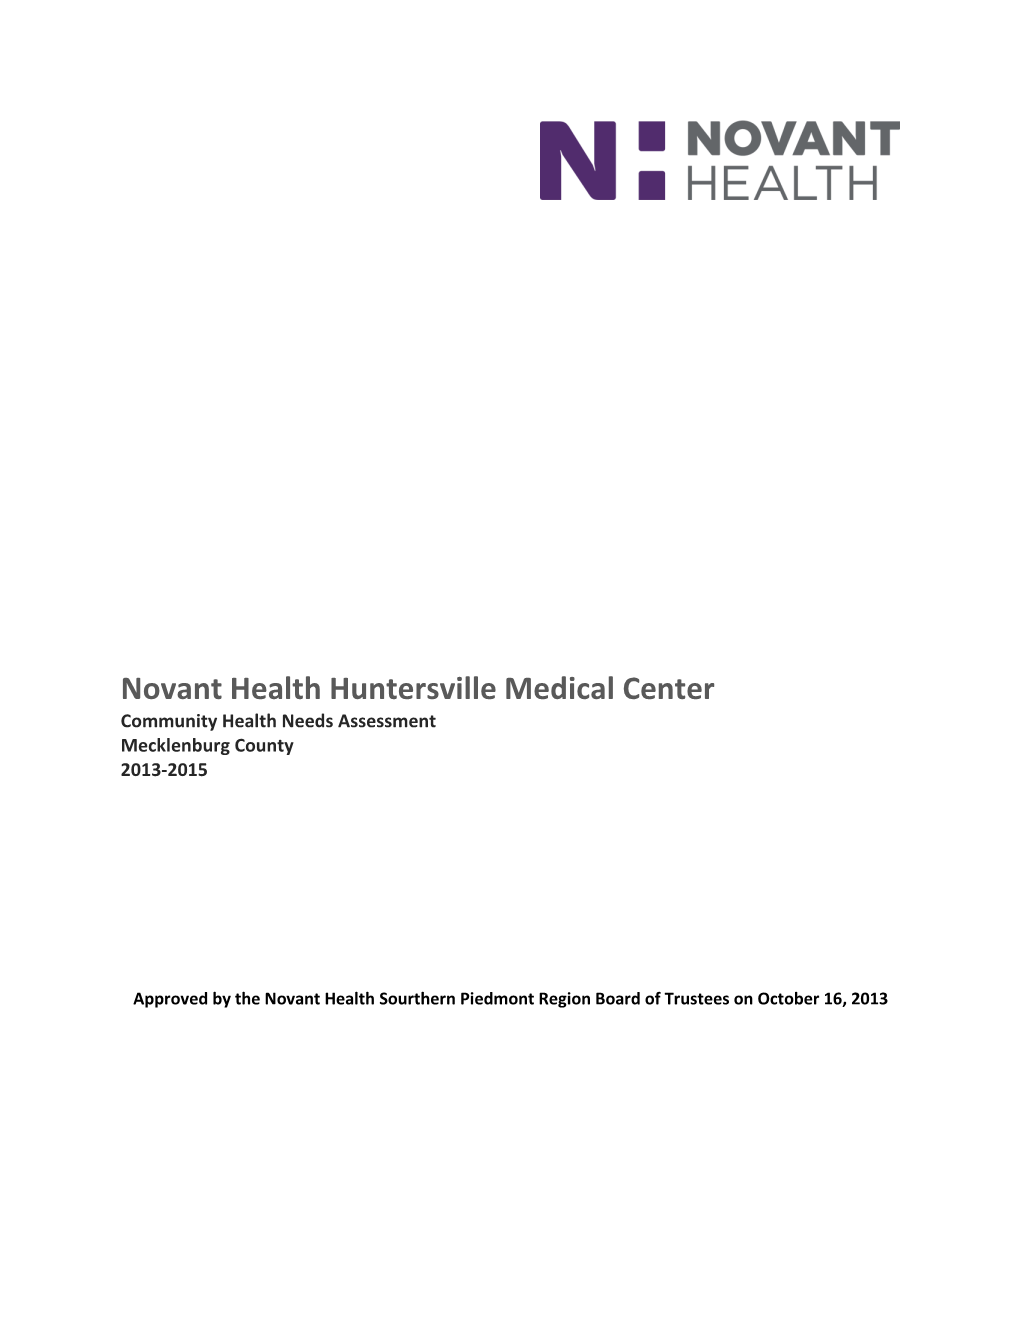 Novant Health Huntersville Medical Center Community Health Needs Assessment Mecklenburg County 2013-2015